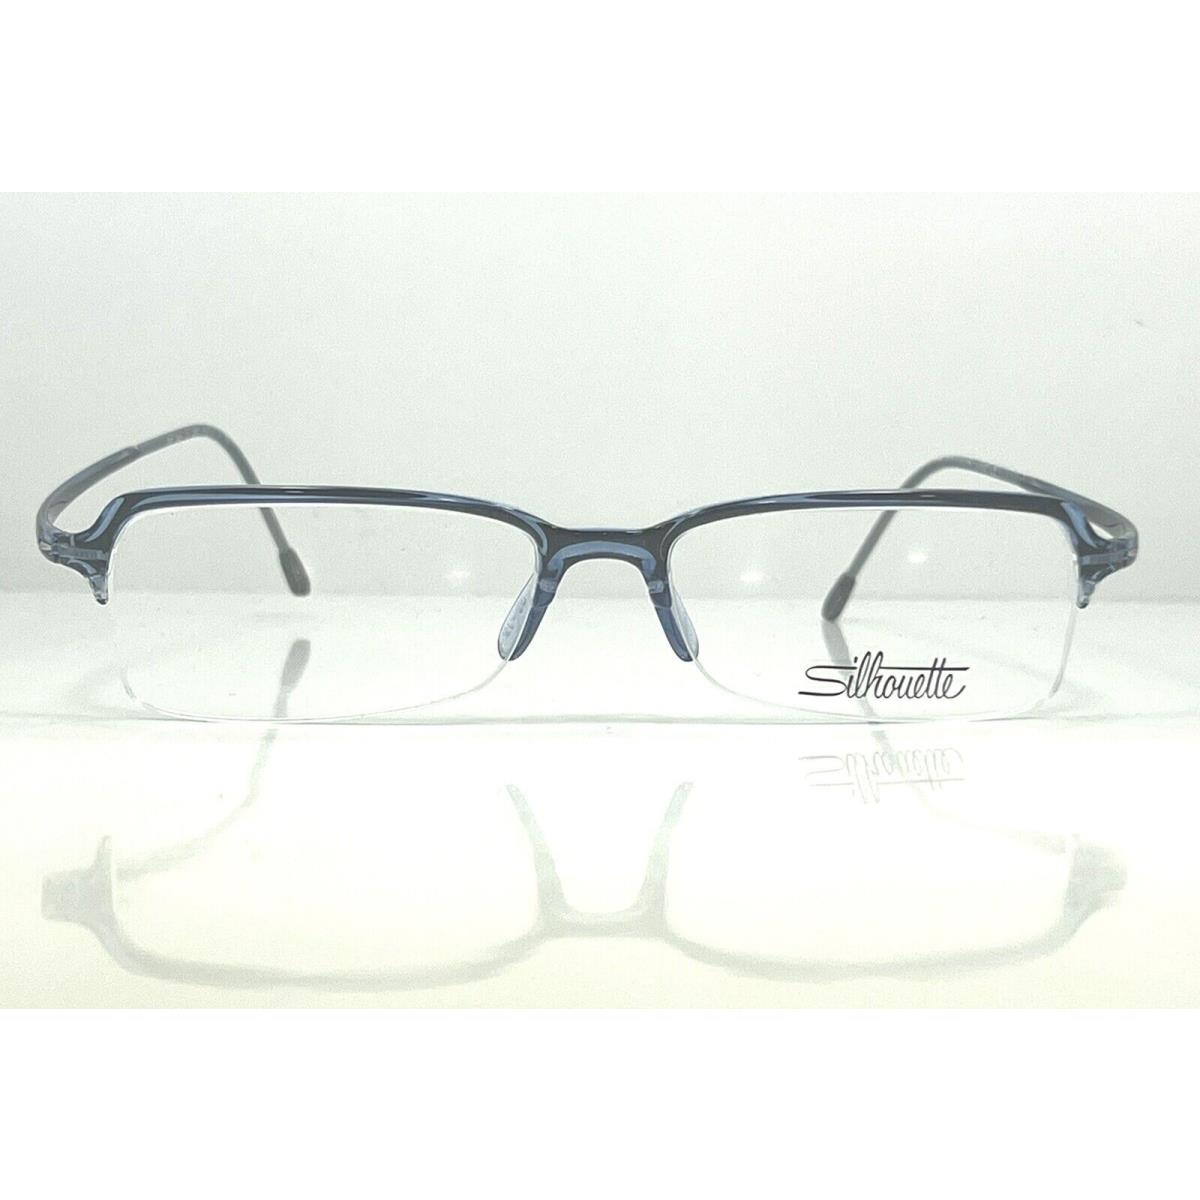 Silhouette Eyeglass Frames Spx 2845 10 6087